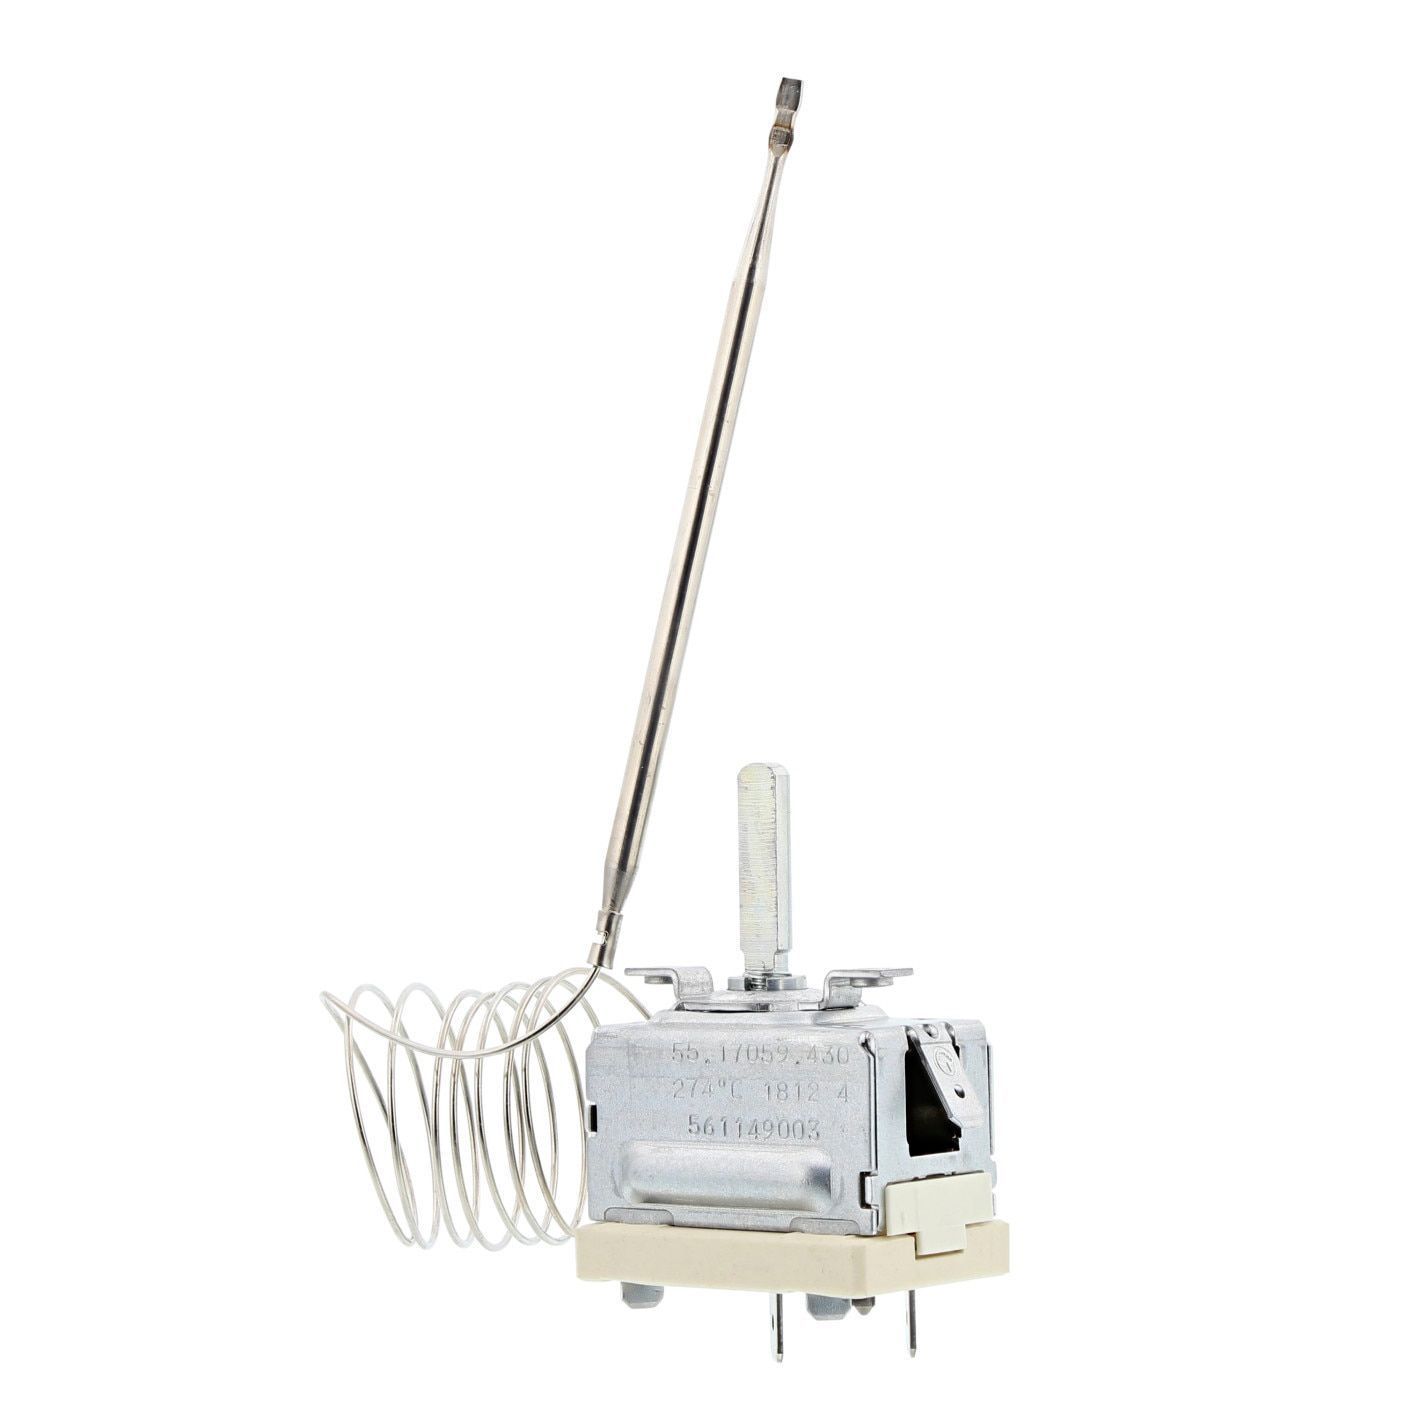 Oven Thermostat for Electrolux AEG Zanussi Philco Cookers - 3570832018 AEG / Electrolux / Zanussi